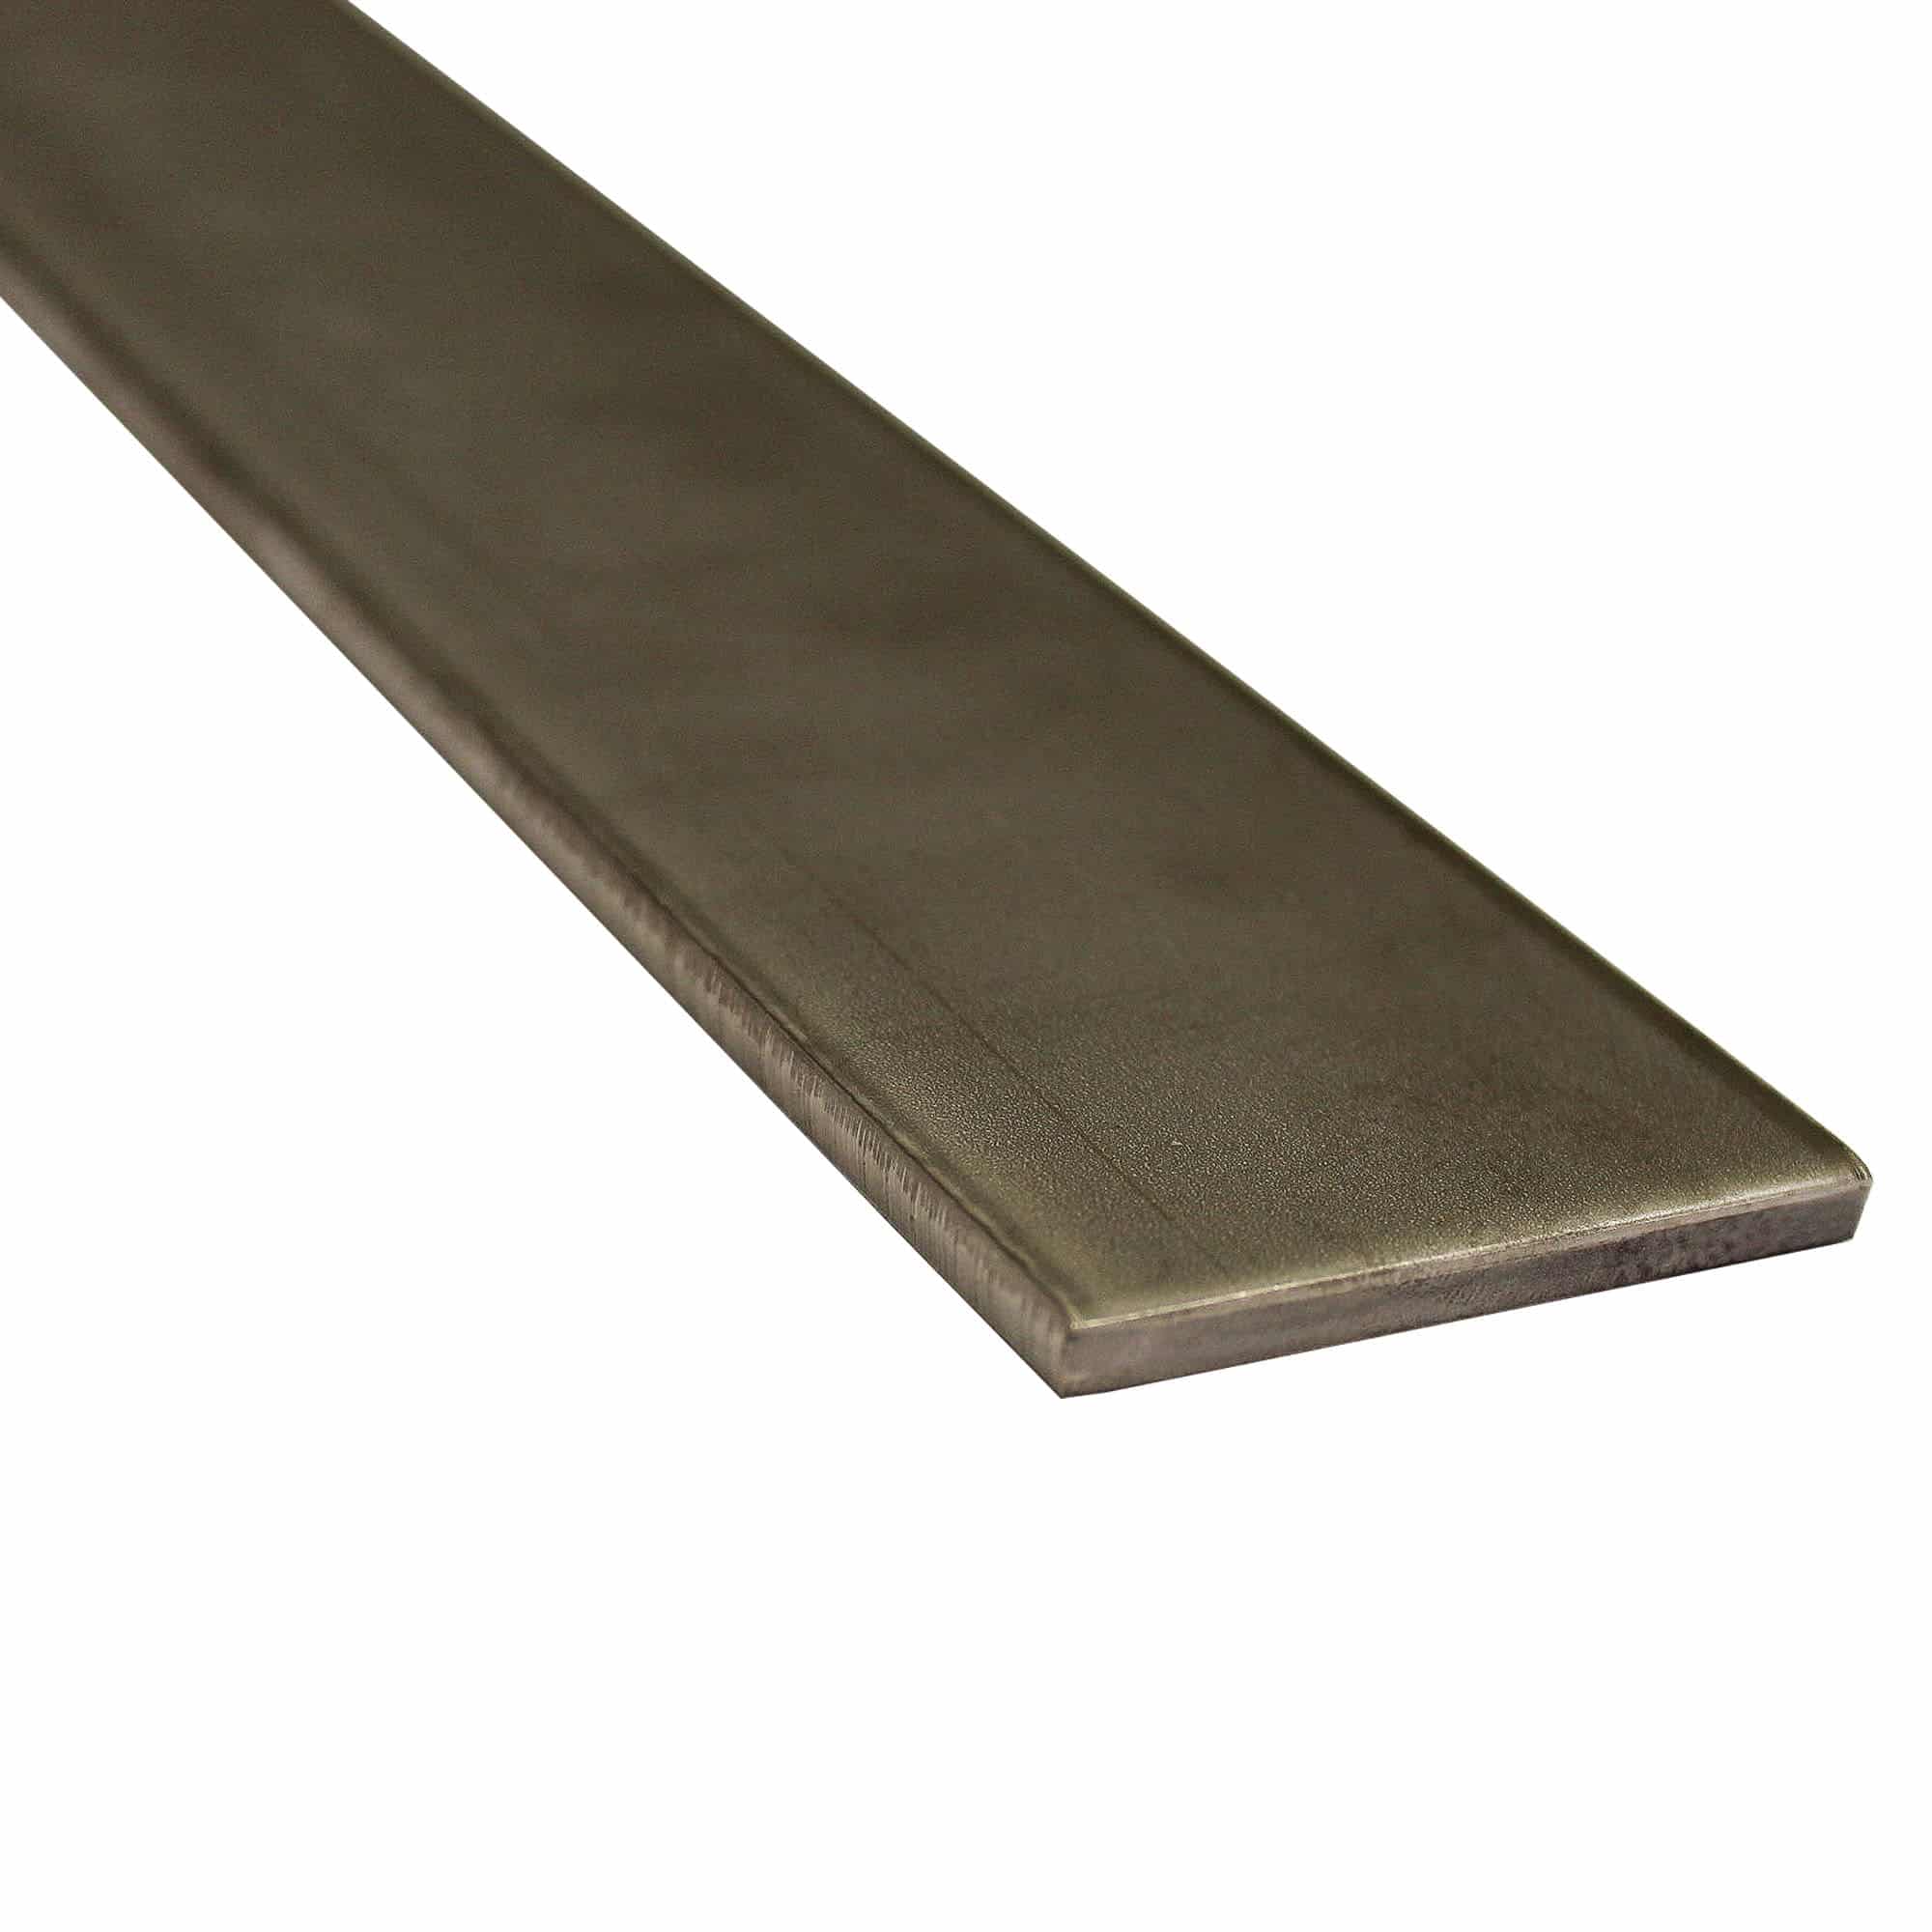 Stainless Steel 304 Grade Flat Bar 5mm Thick x 50mm Width